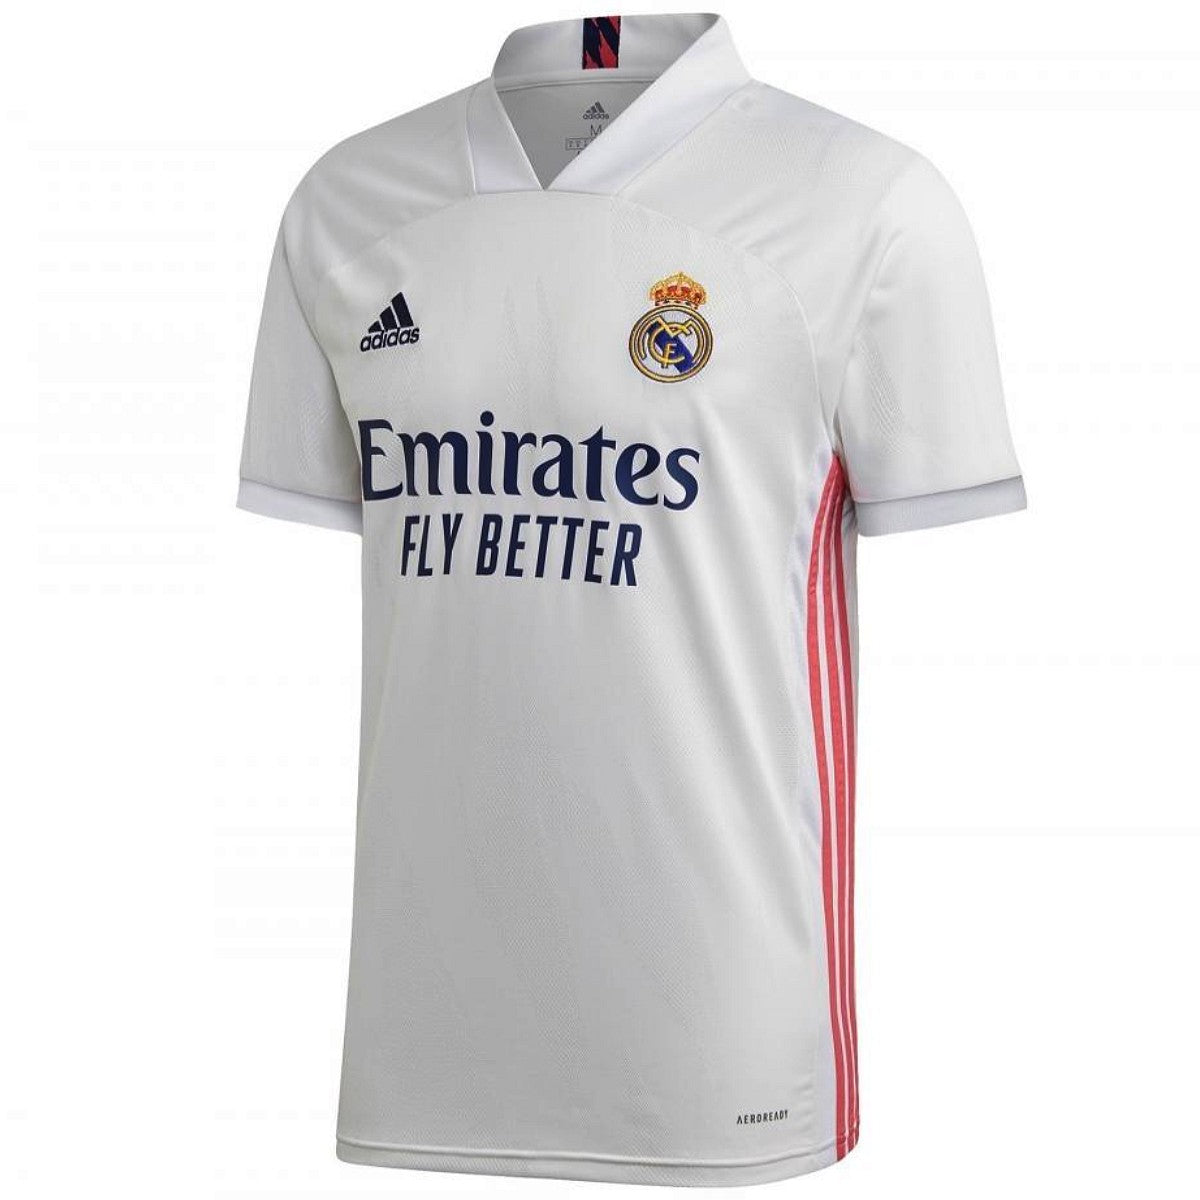 los sentido común Ineficiente Real Madrid CF Home soccer jersey 2020/21 - Adidas – SoccerTracksuits.com